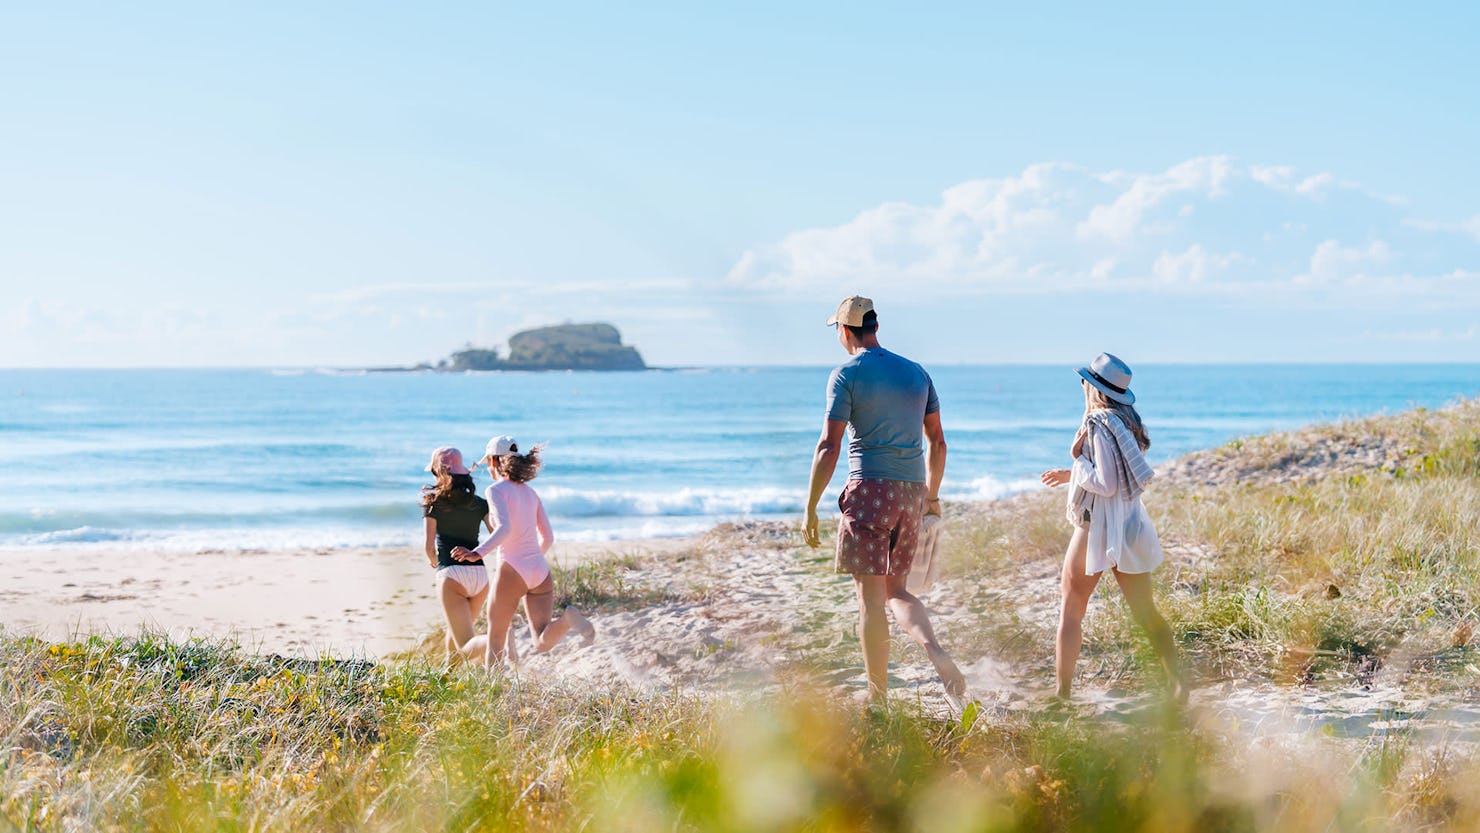 Secret summer spots to cool down on the Sunshine Coast 